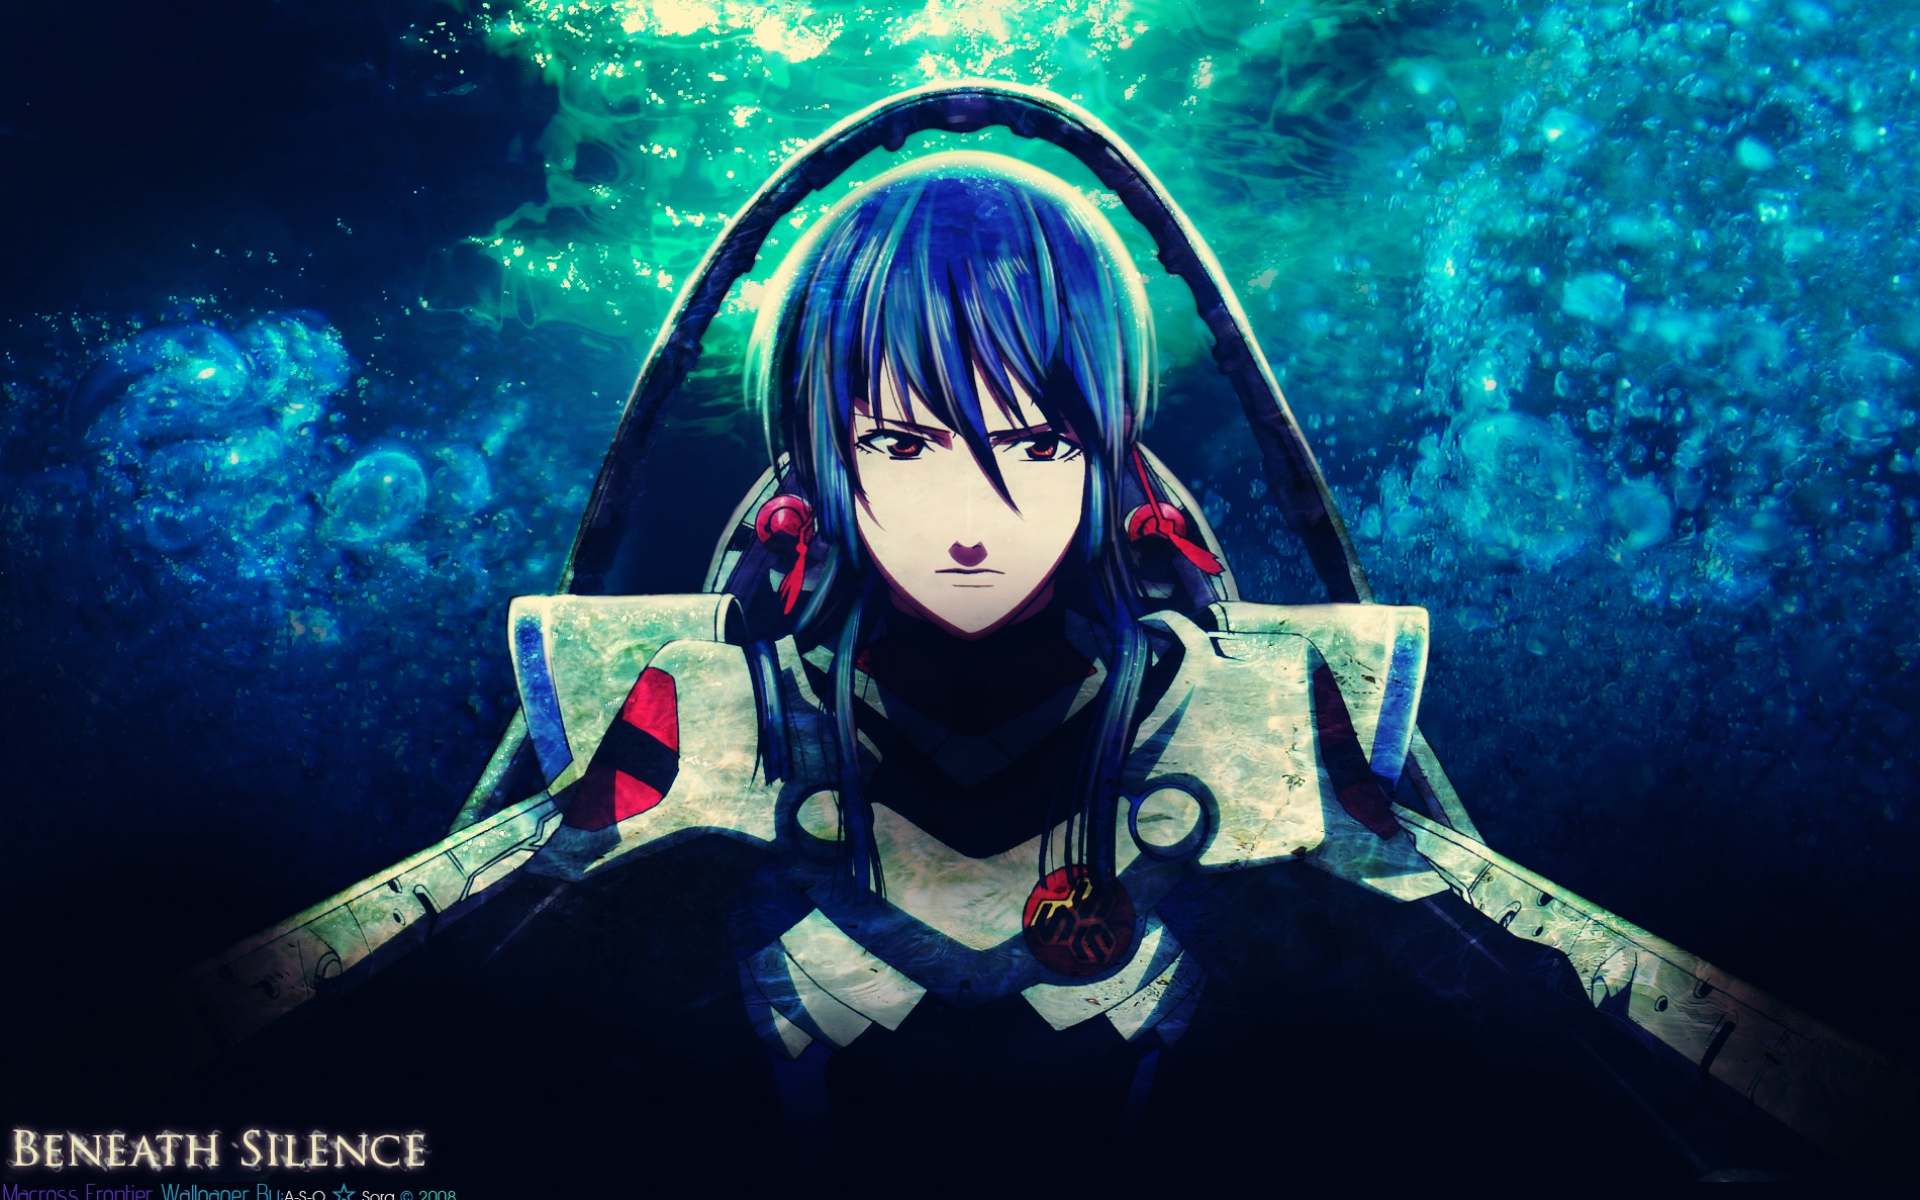 Anime Macross HD Wallpaper | Background Image